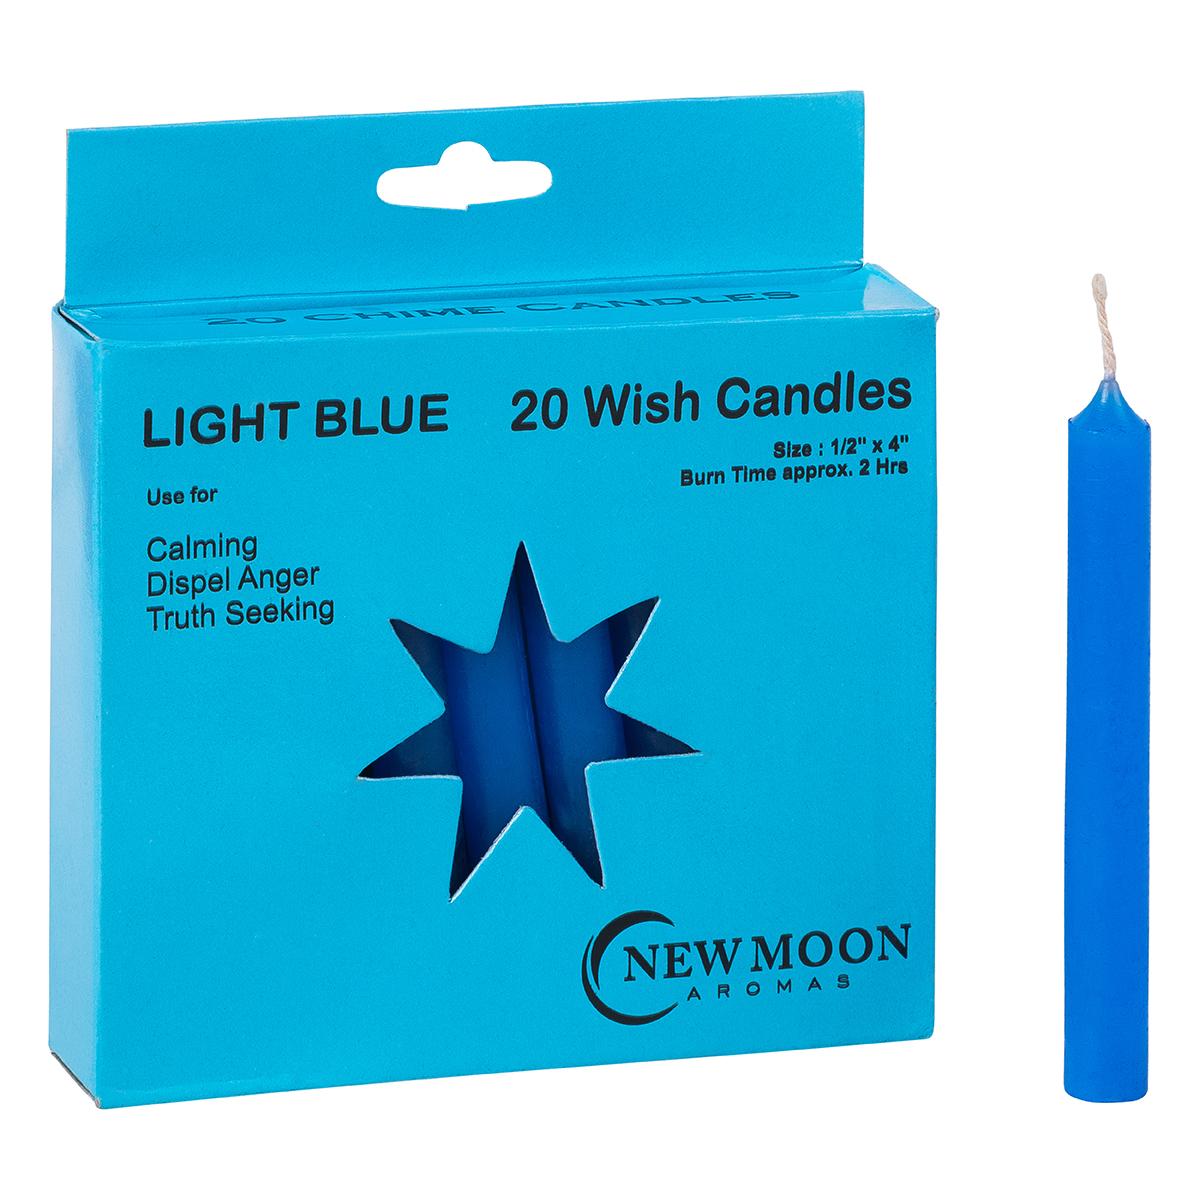 Wish Candles -Light Blue